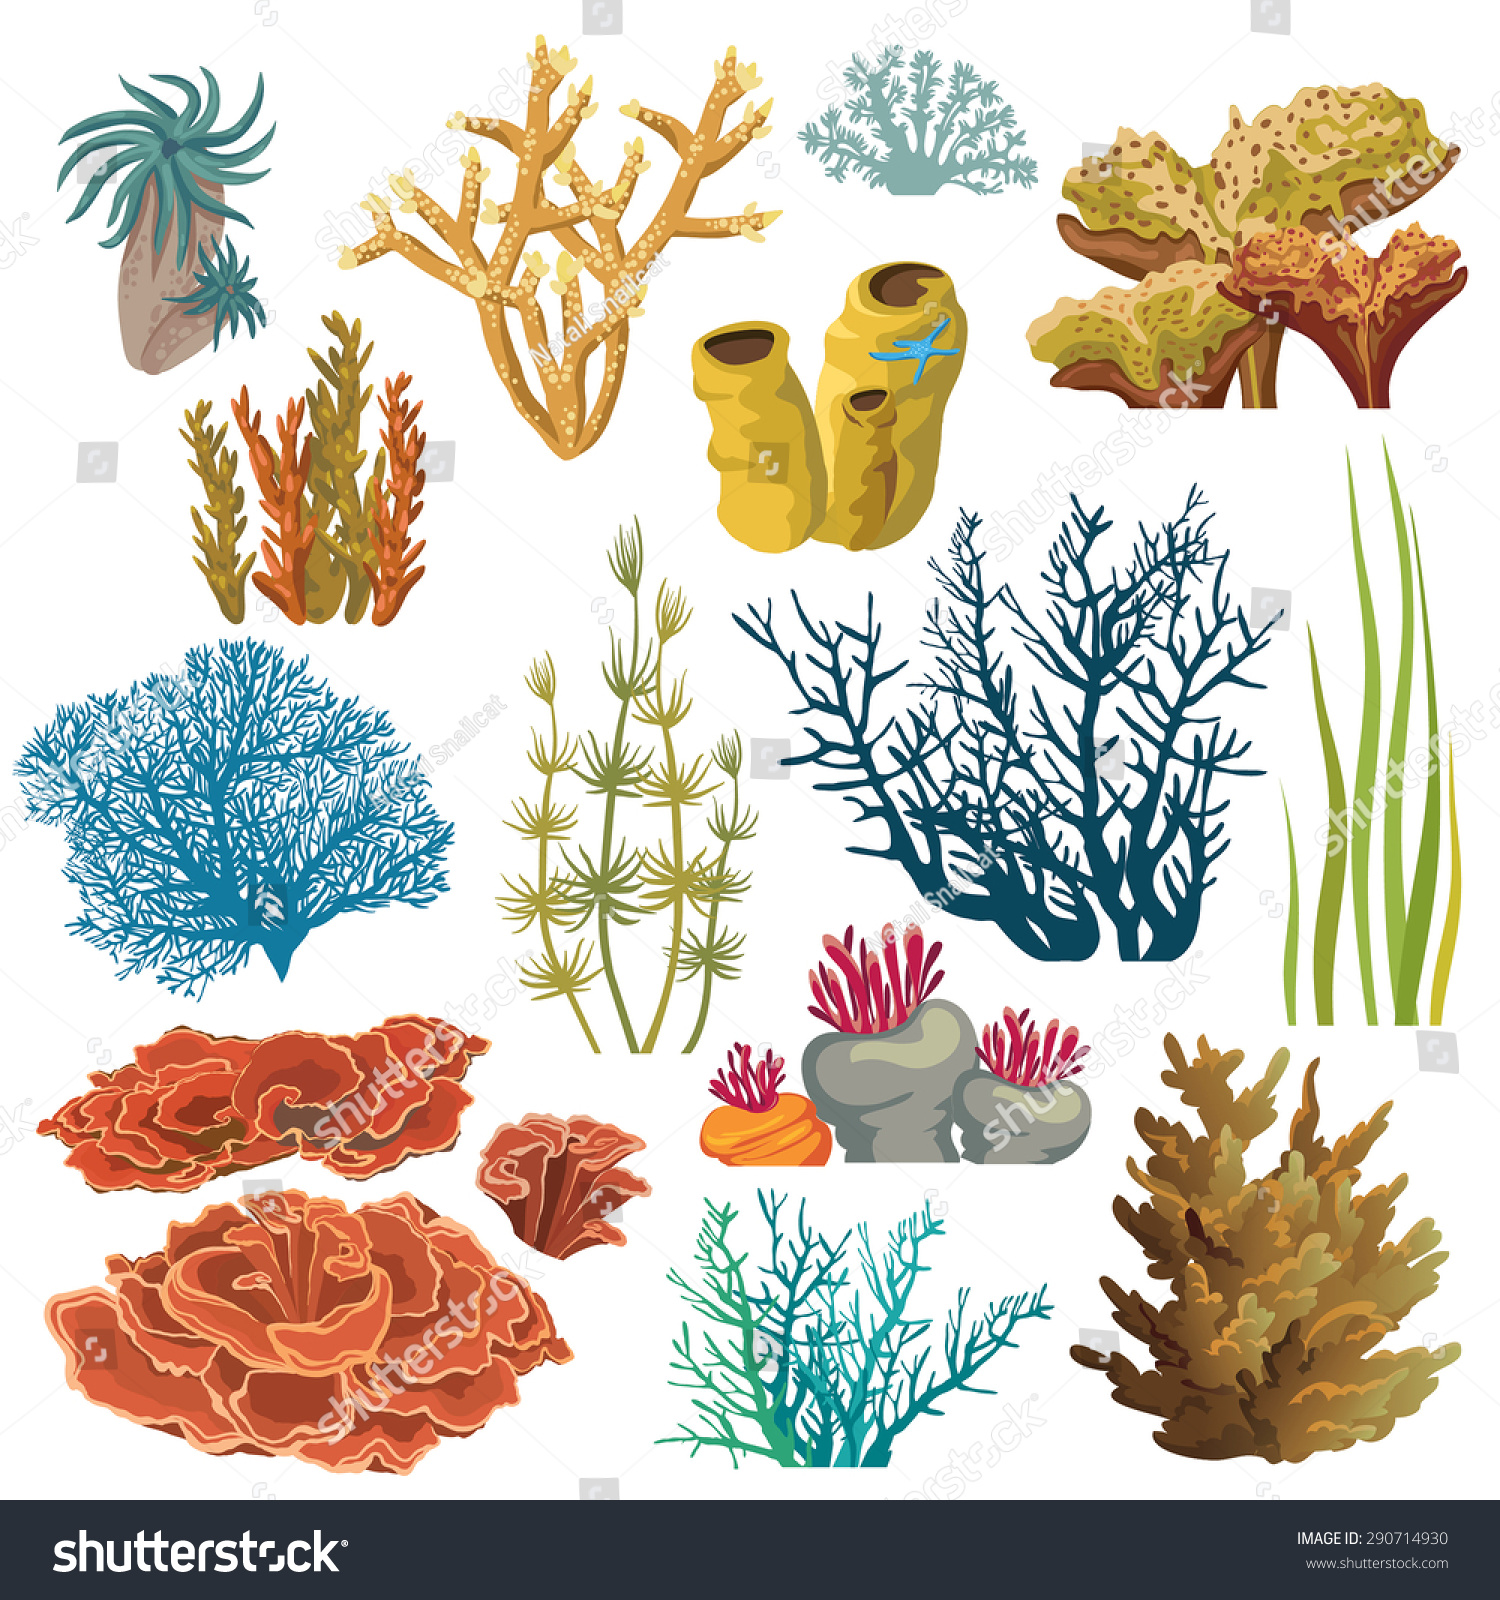 underwater plants clipart - photo #48